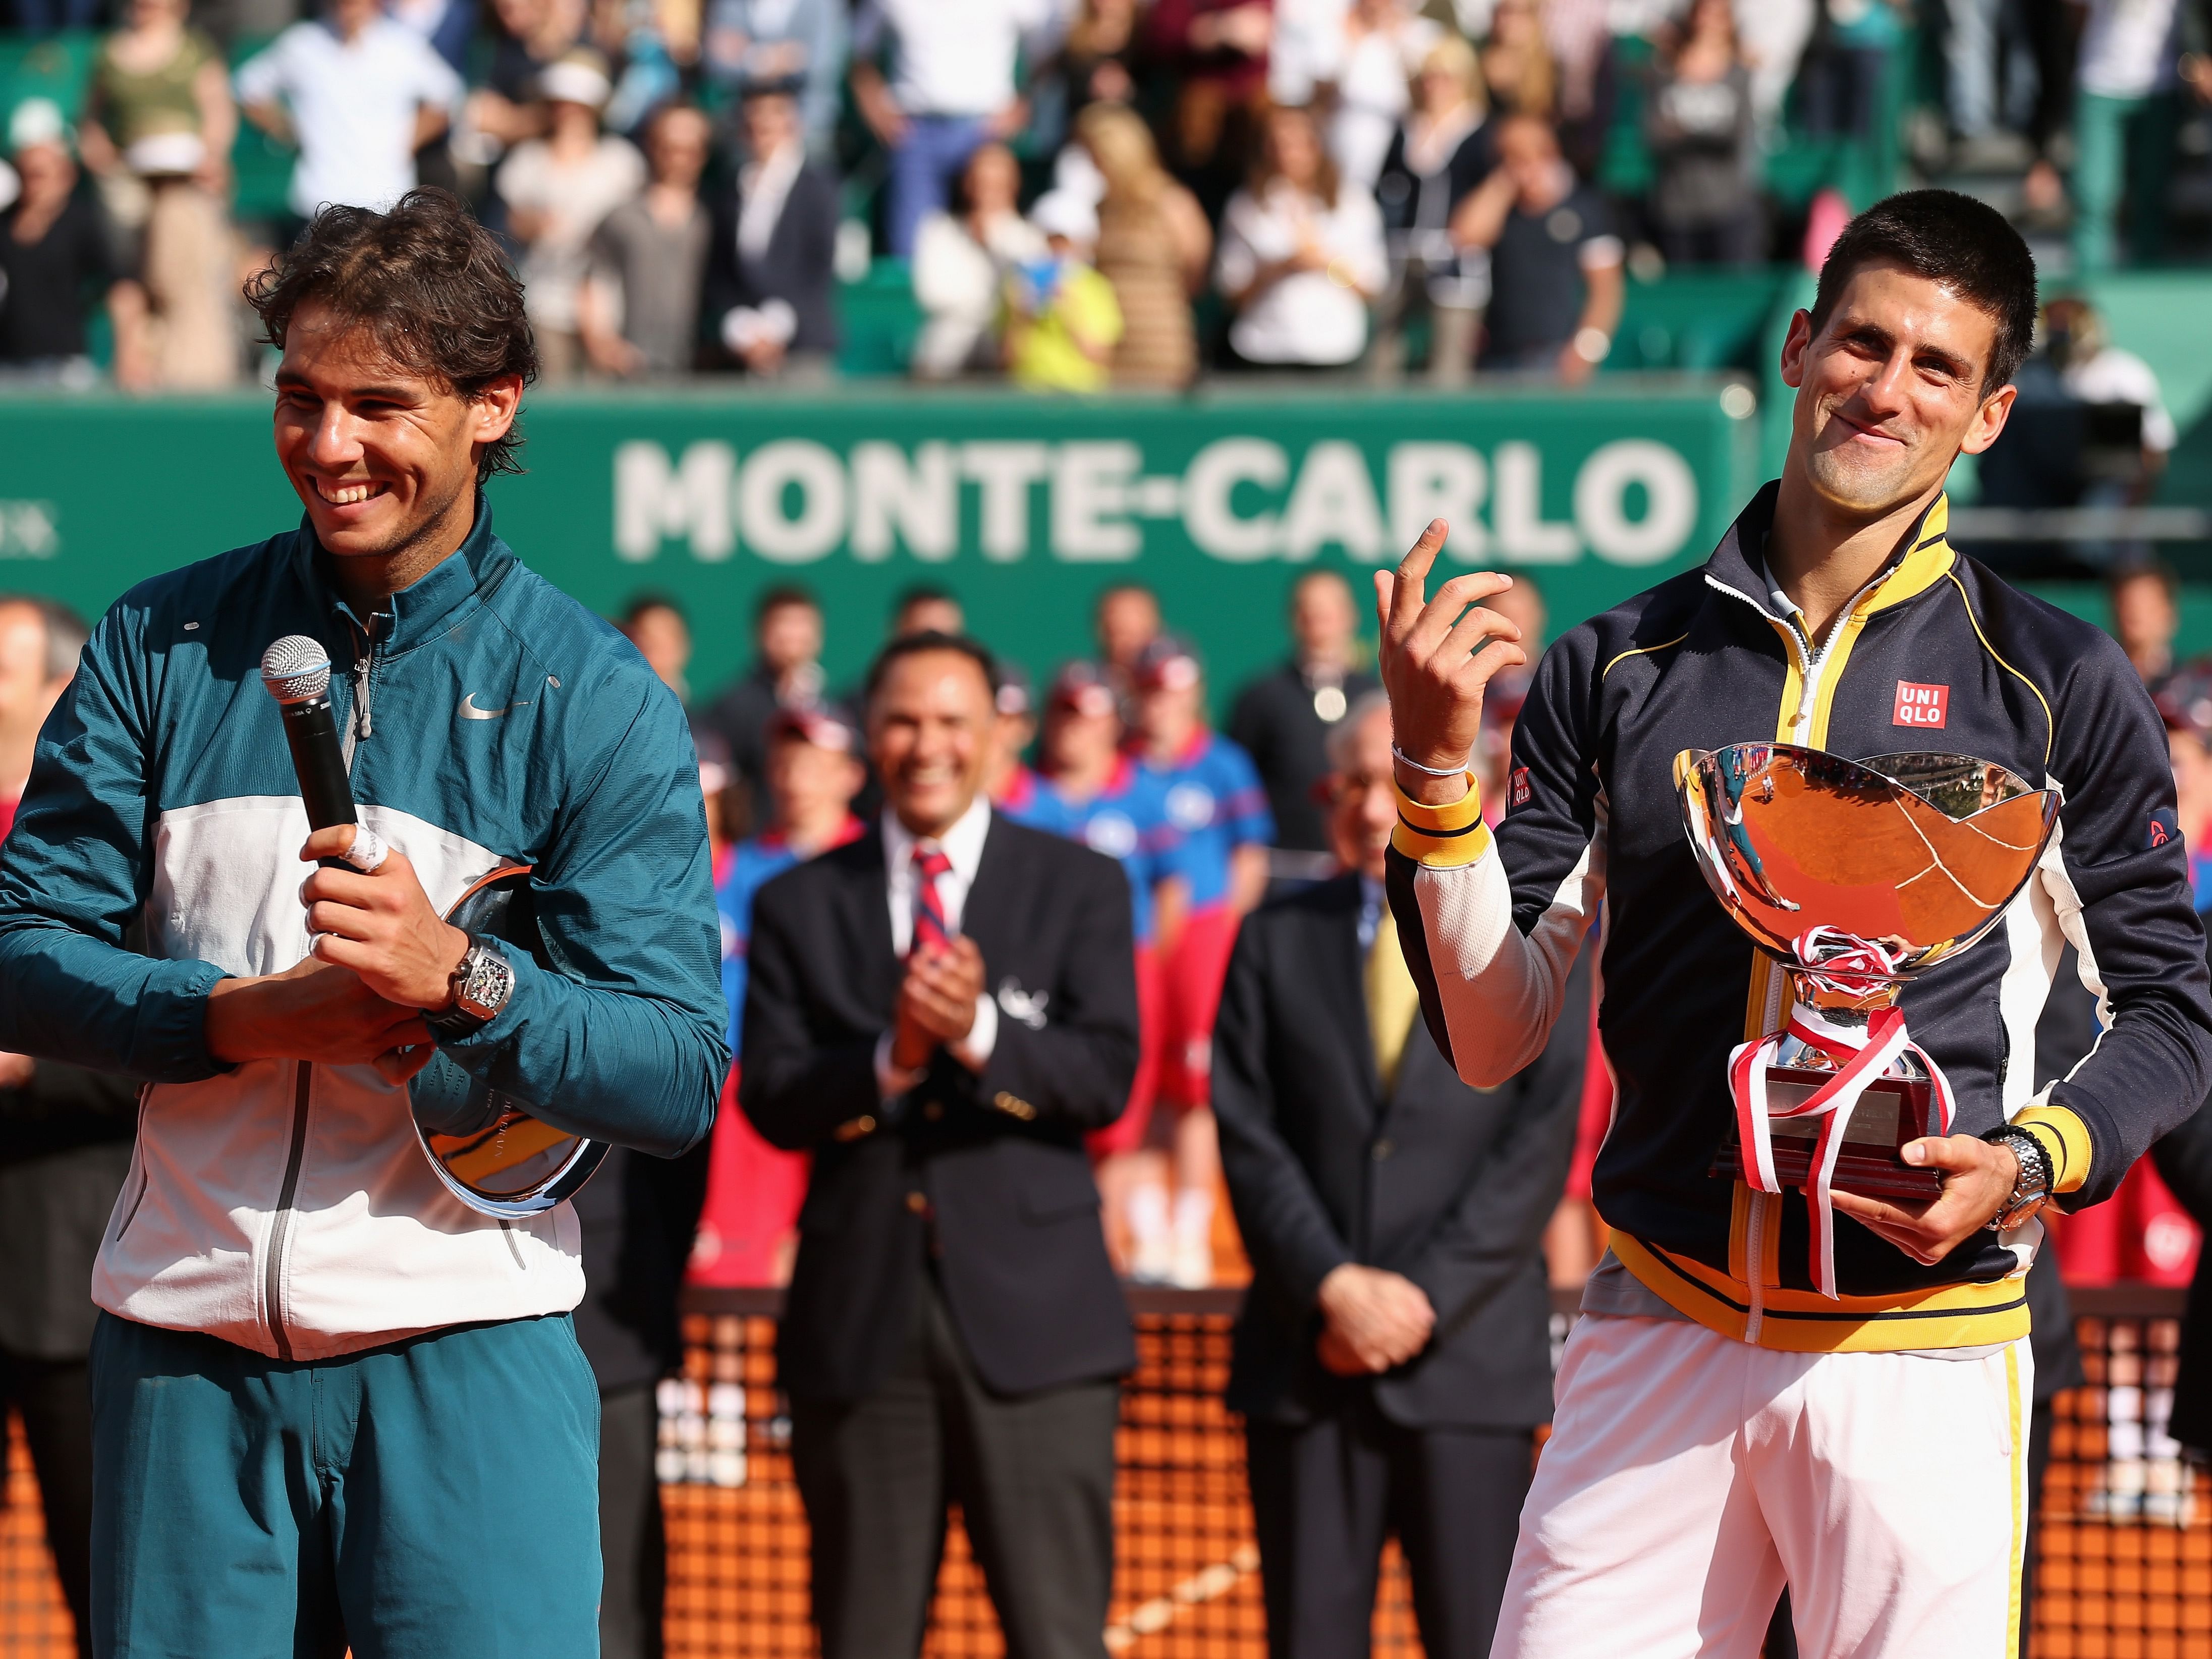 Novak Djokovic won his first title in Monte-Carlo in 2013